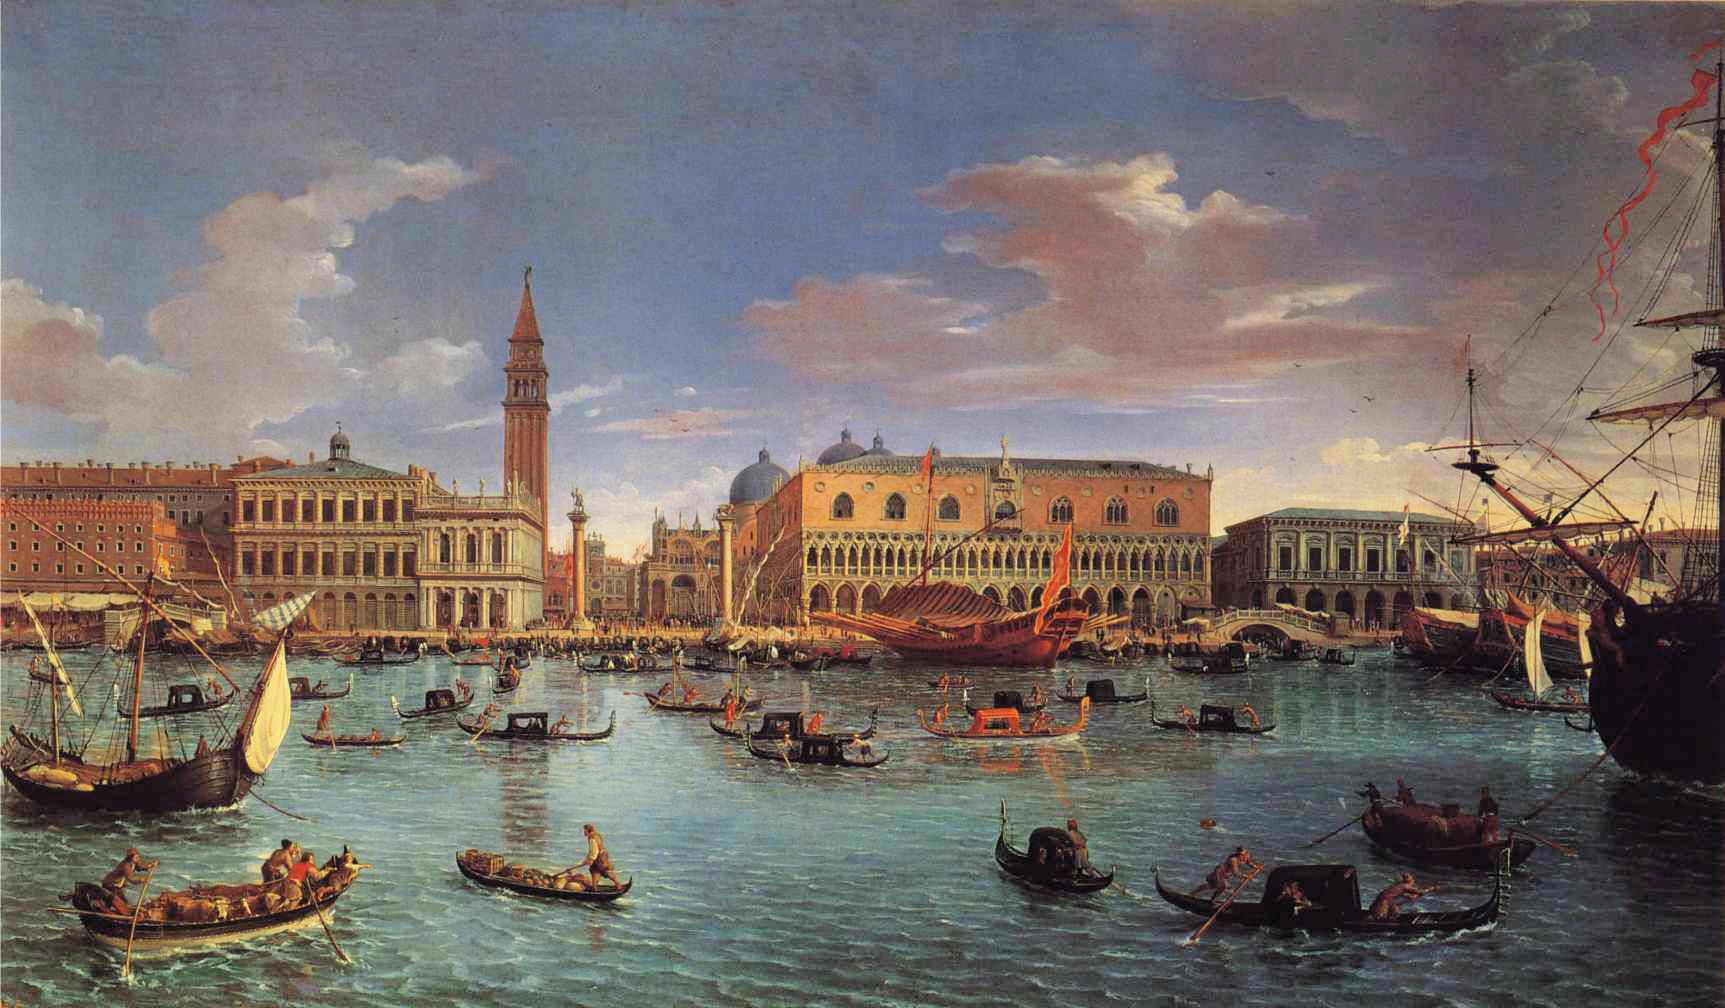 A Brief History of Venice, Italy